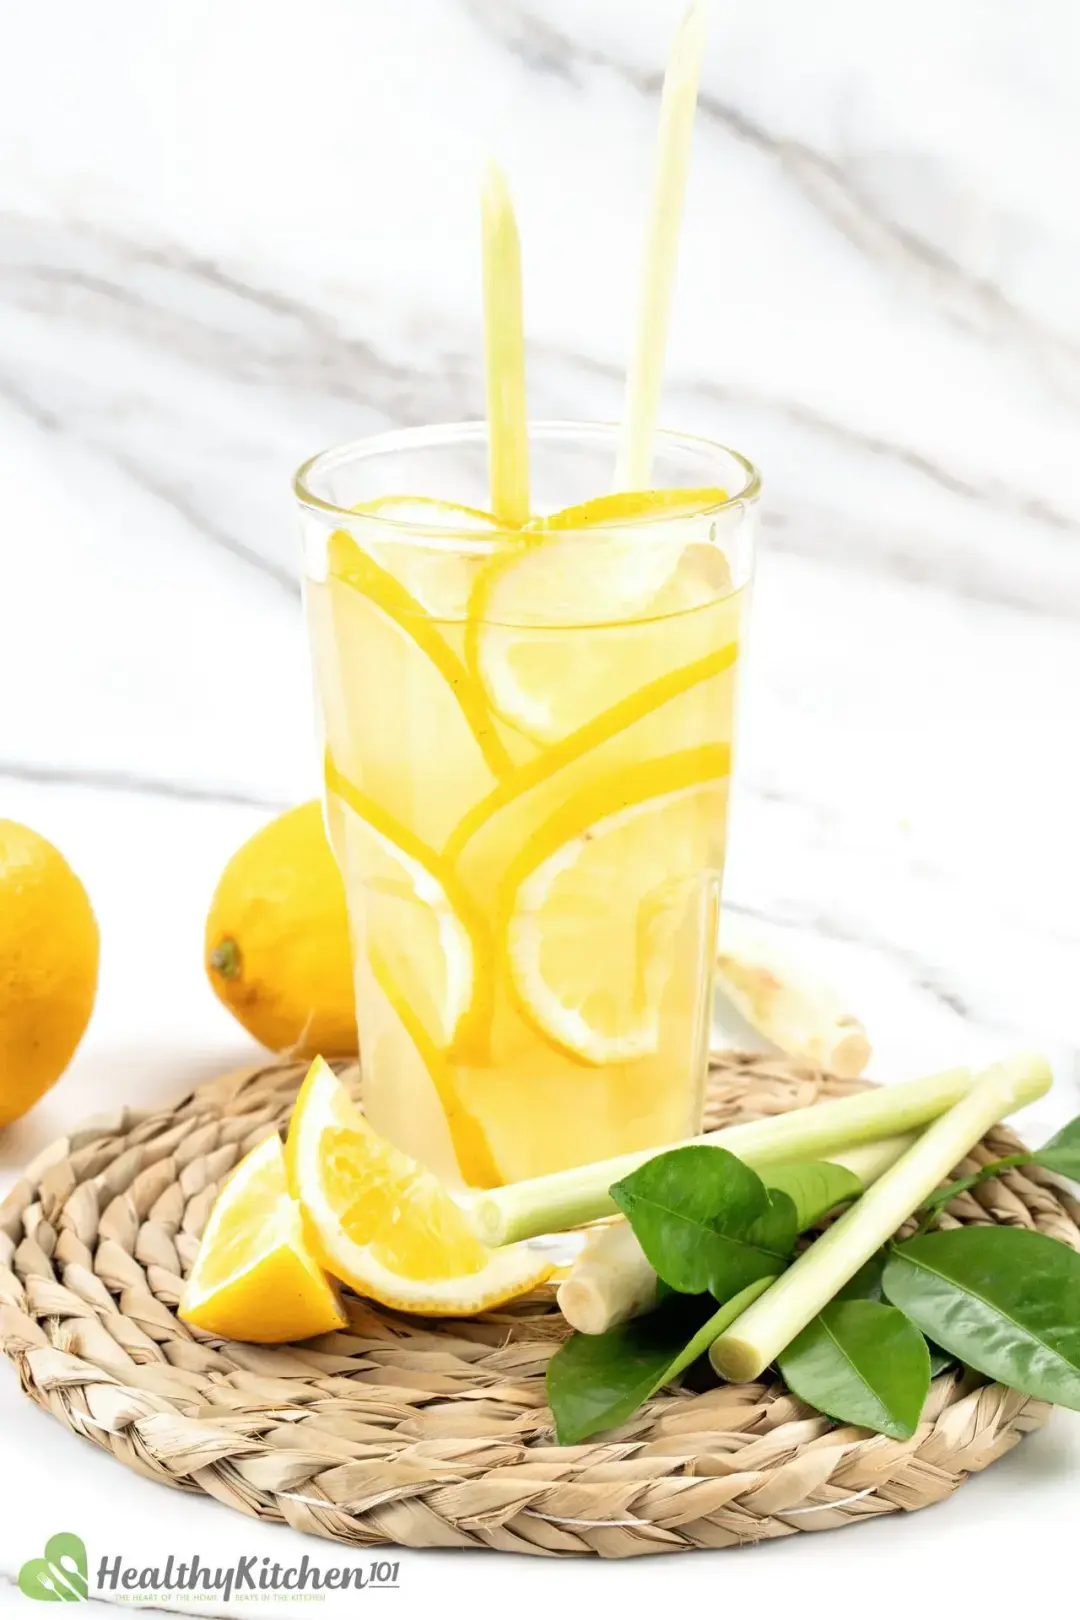 A glass full of juice and lemon wheels put on a woven coaster with lemon wedges, lemongrass stalks, and lemon leaves